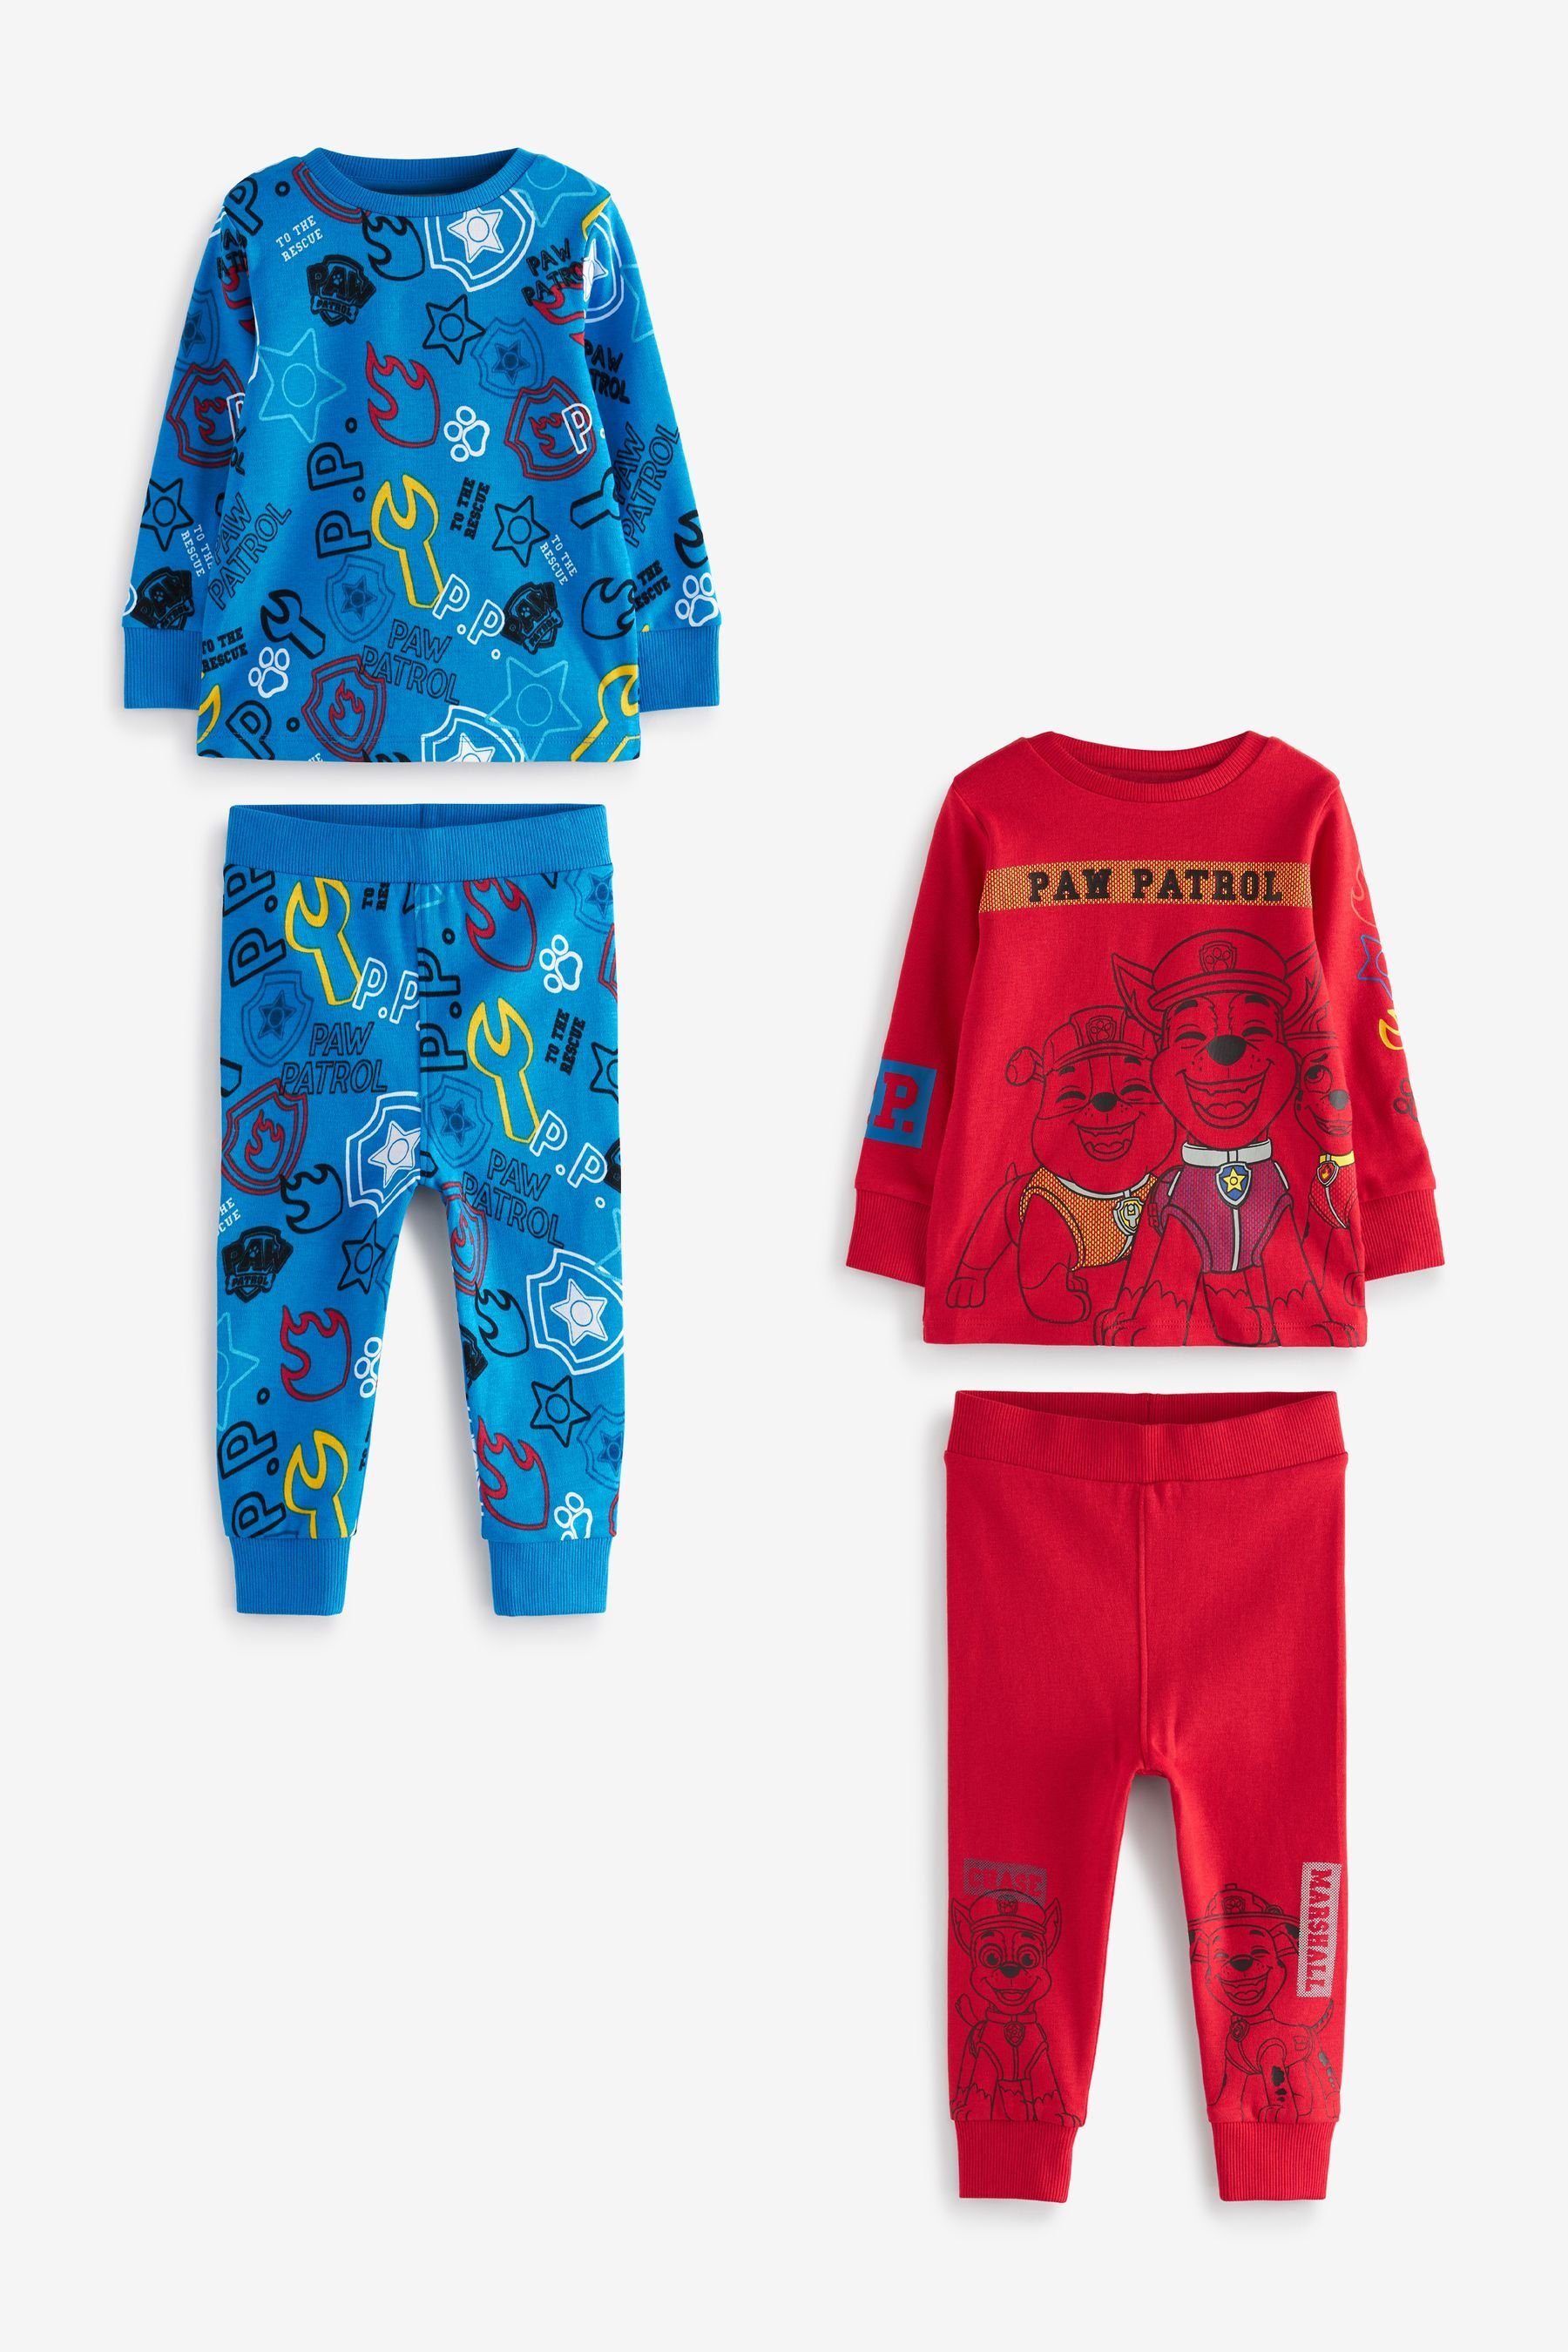 Next Pyjama Kuschelpyjama, 2er-Pack (4 Patrol tlg) PAW Red/Blue